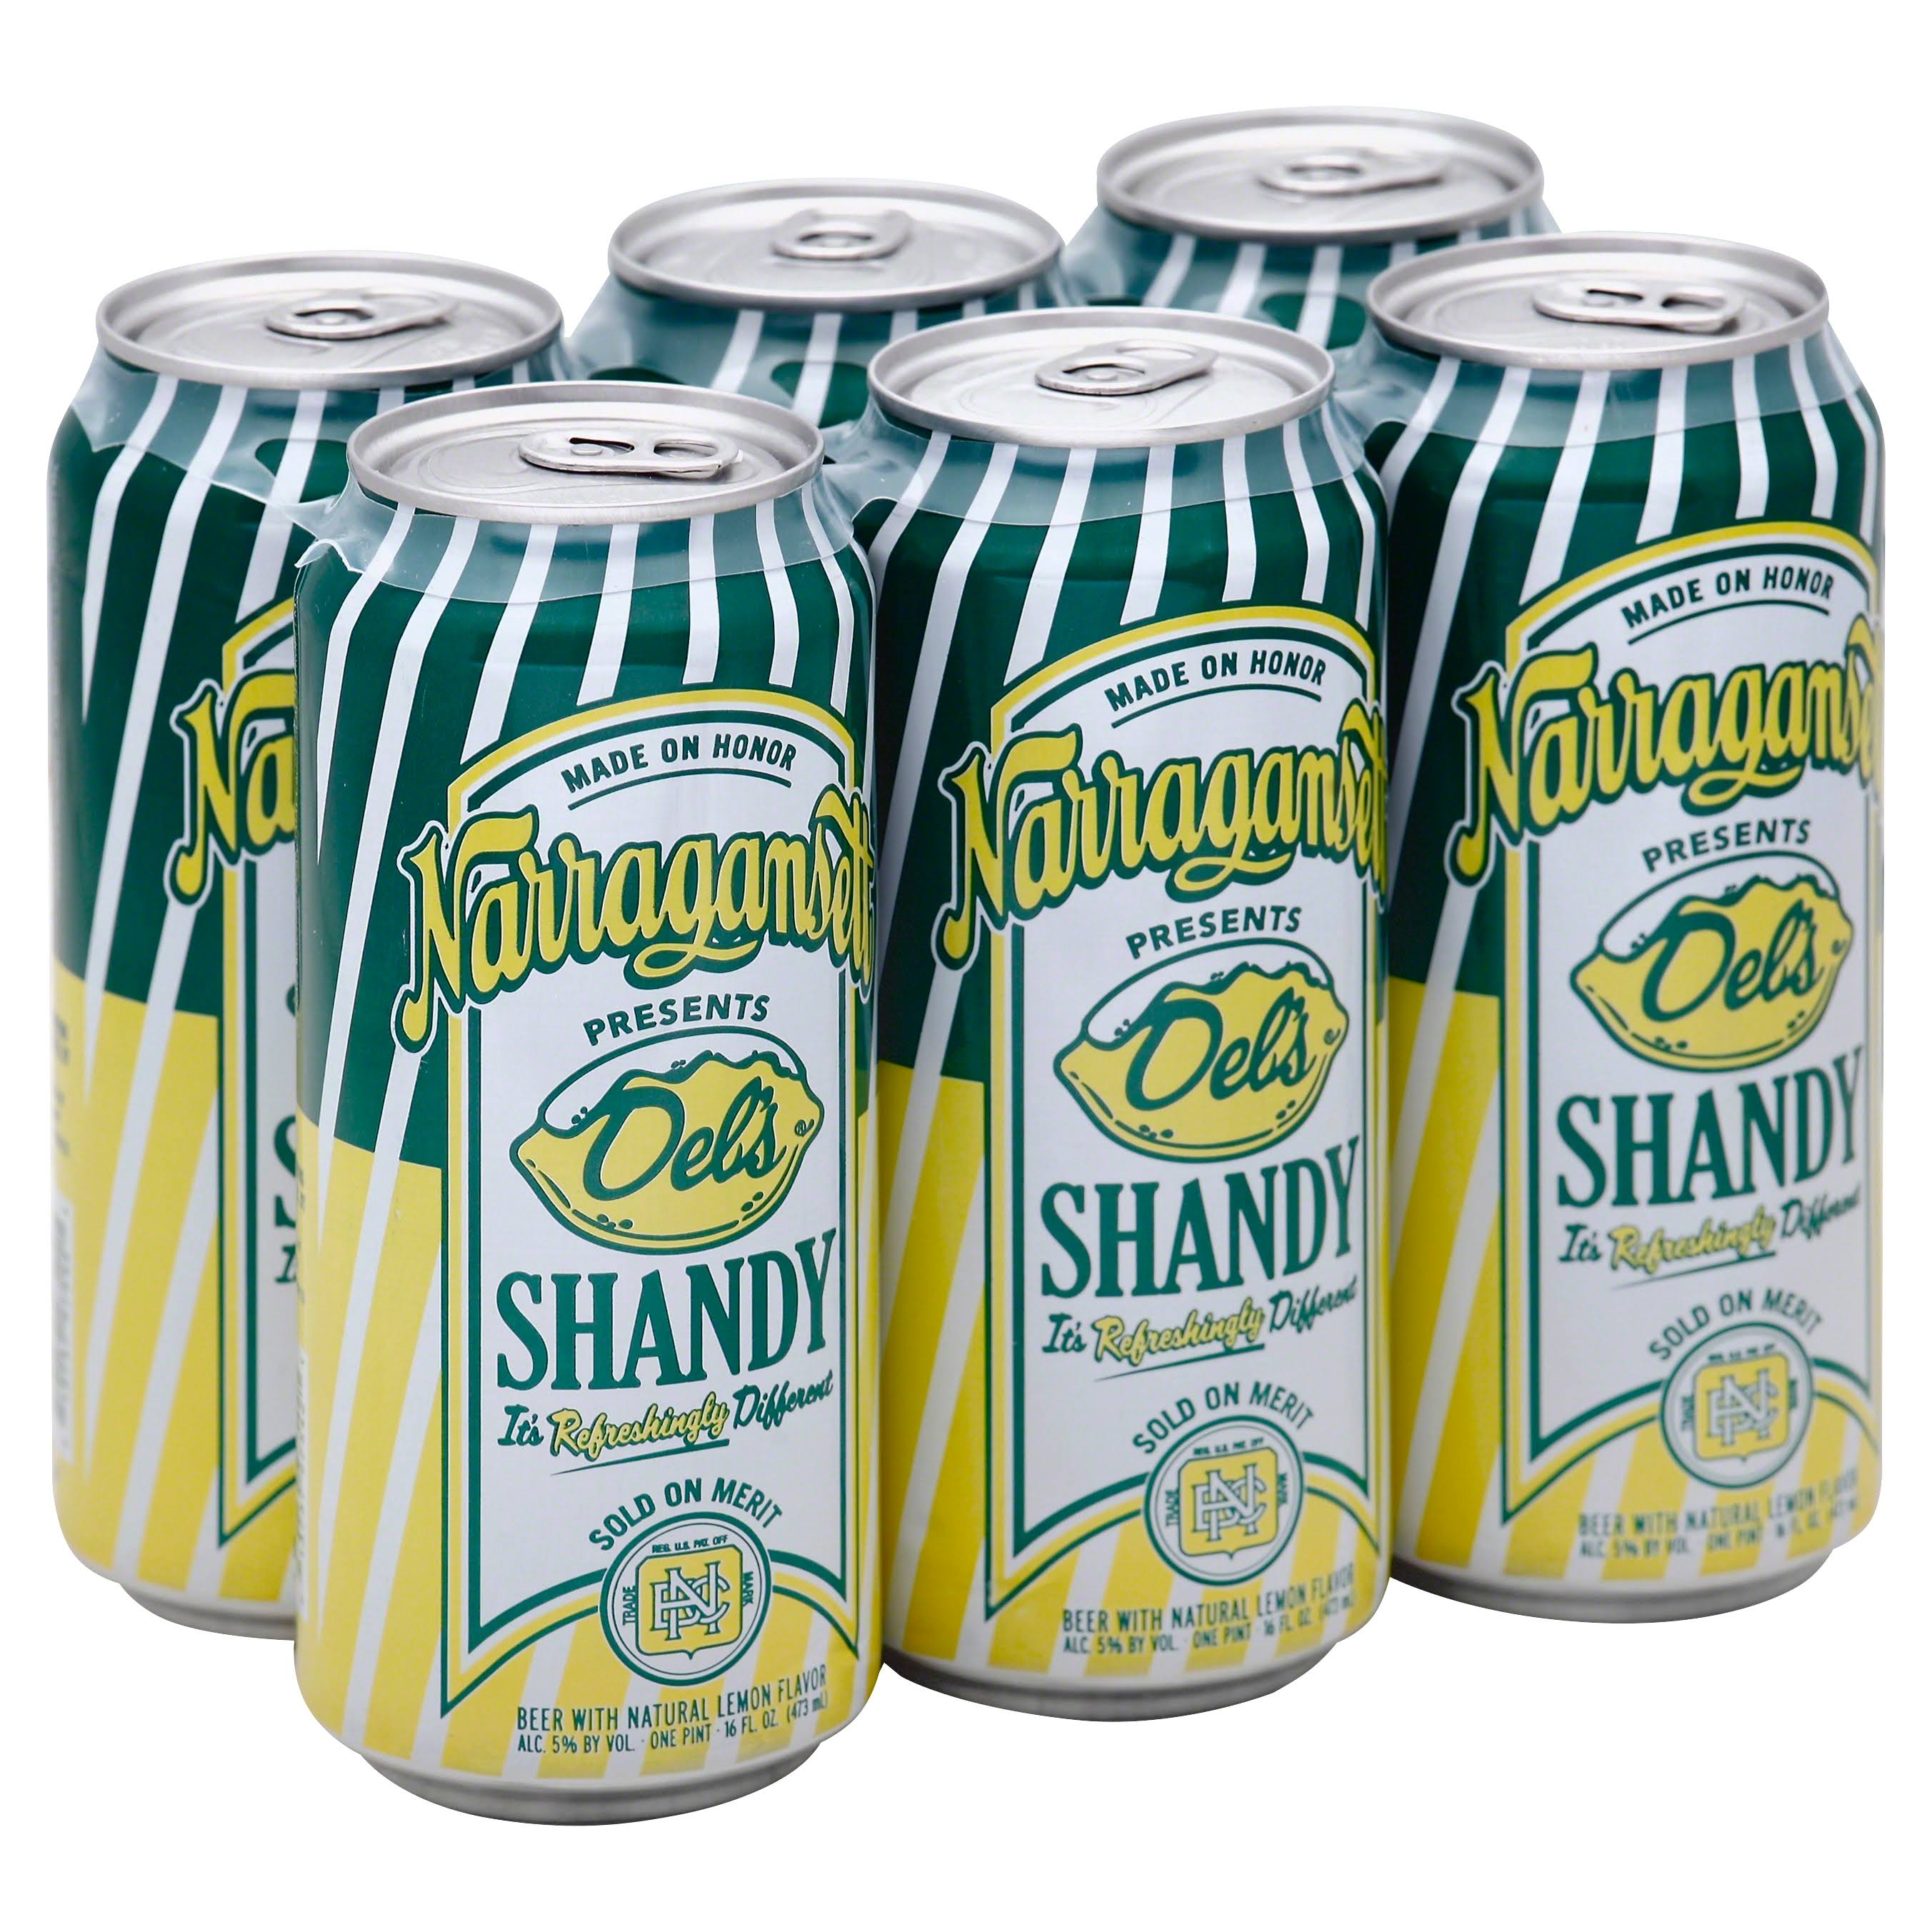 Narragansett Beer, Del's Shandy, with Natural Lemon Flavor - 6 pack, 16 fl oz